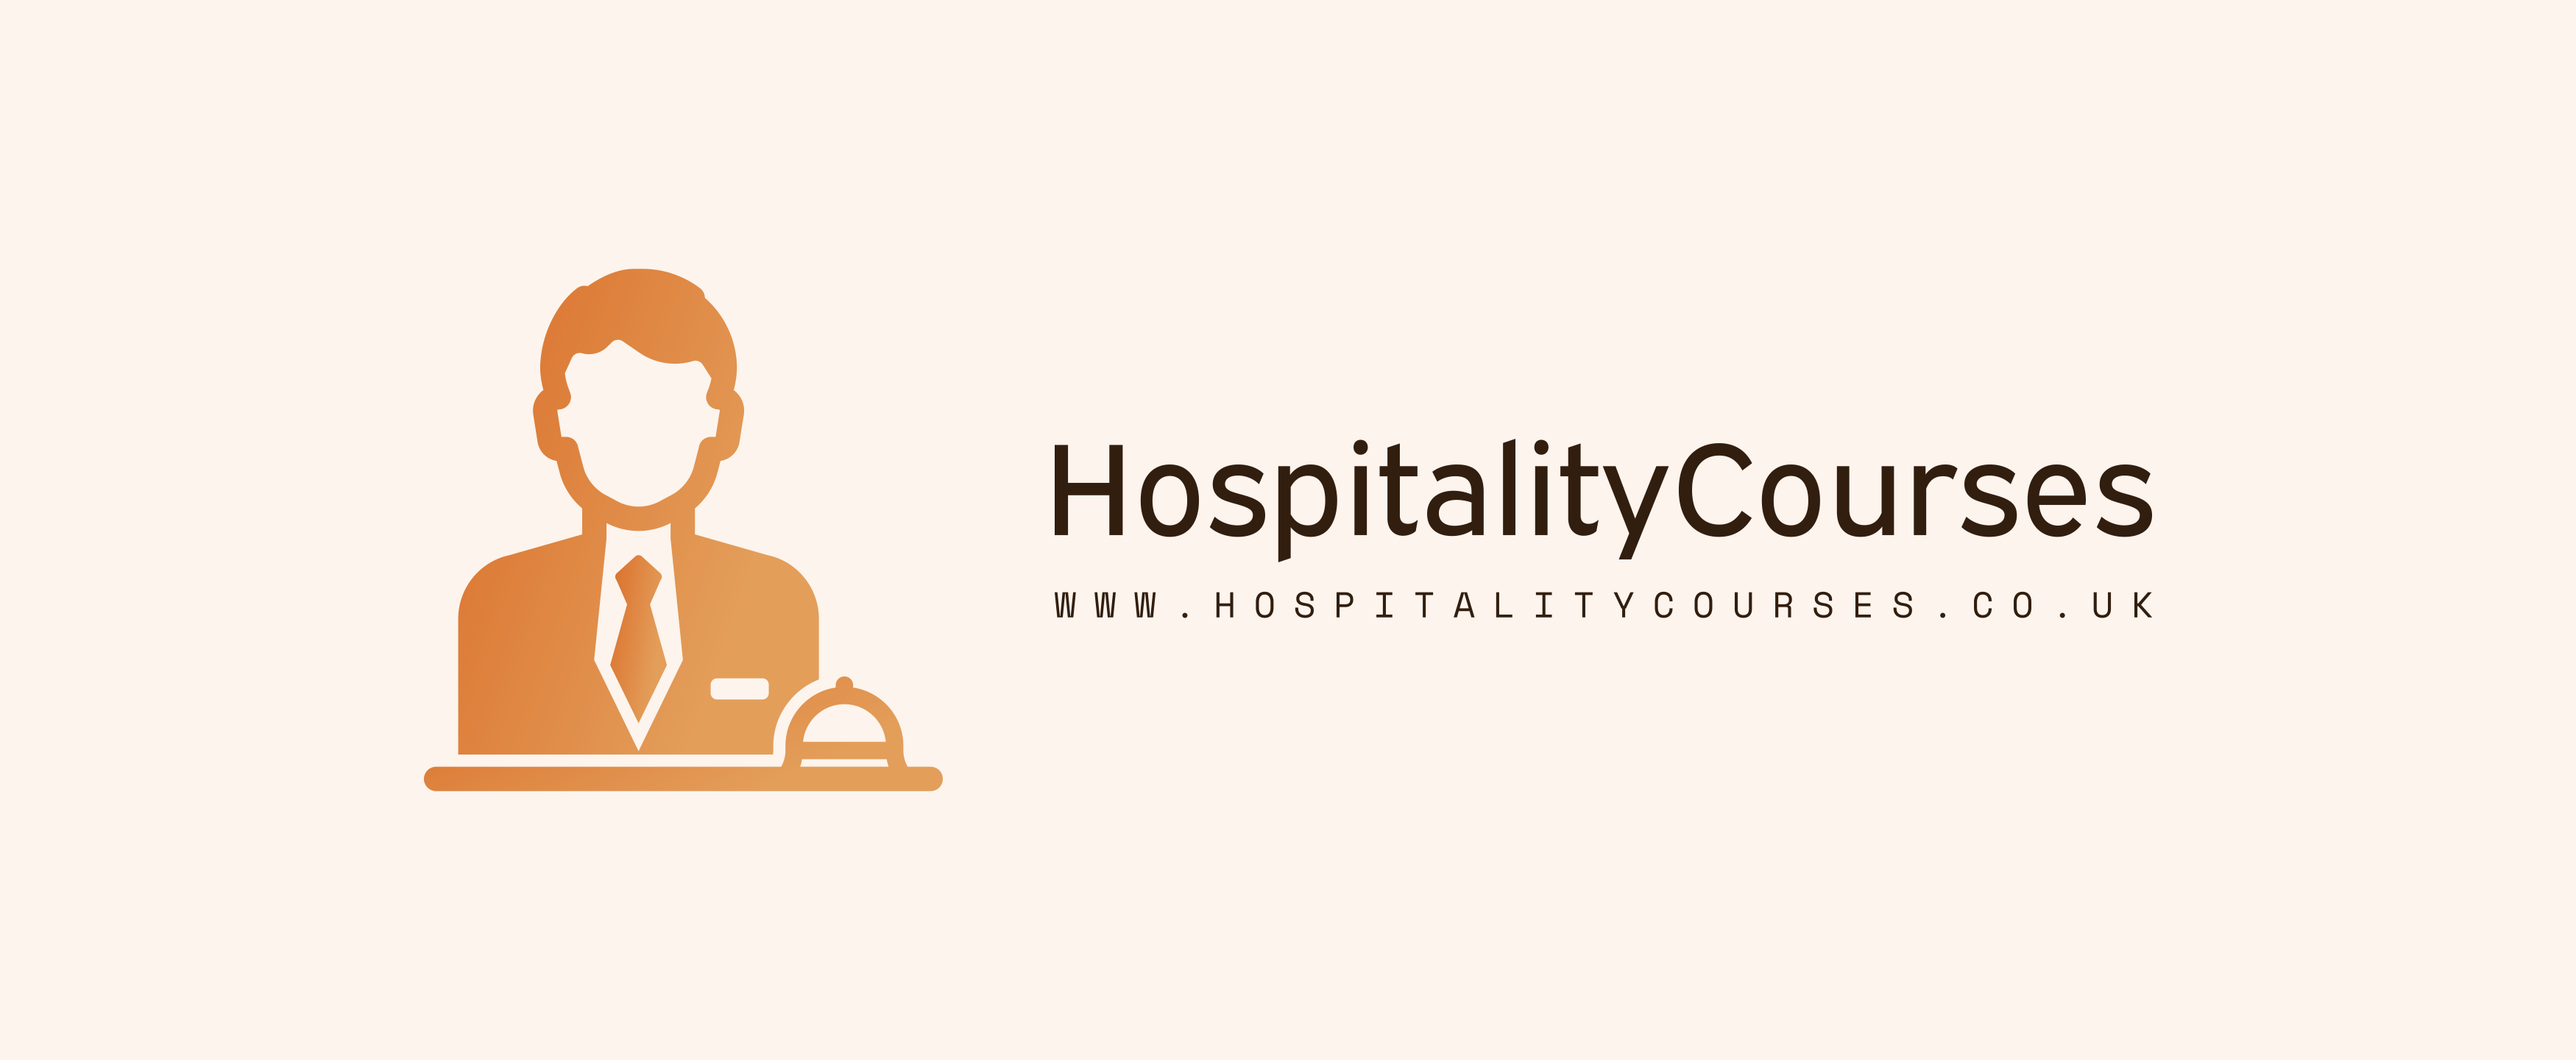 HospitalityCourses